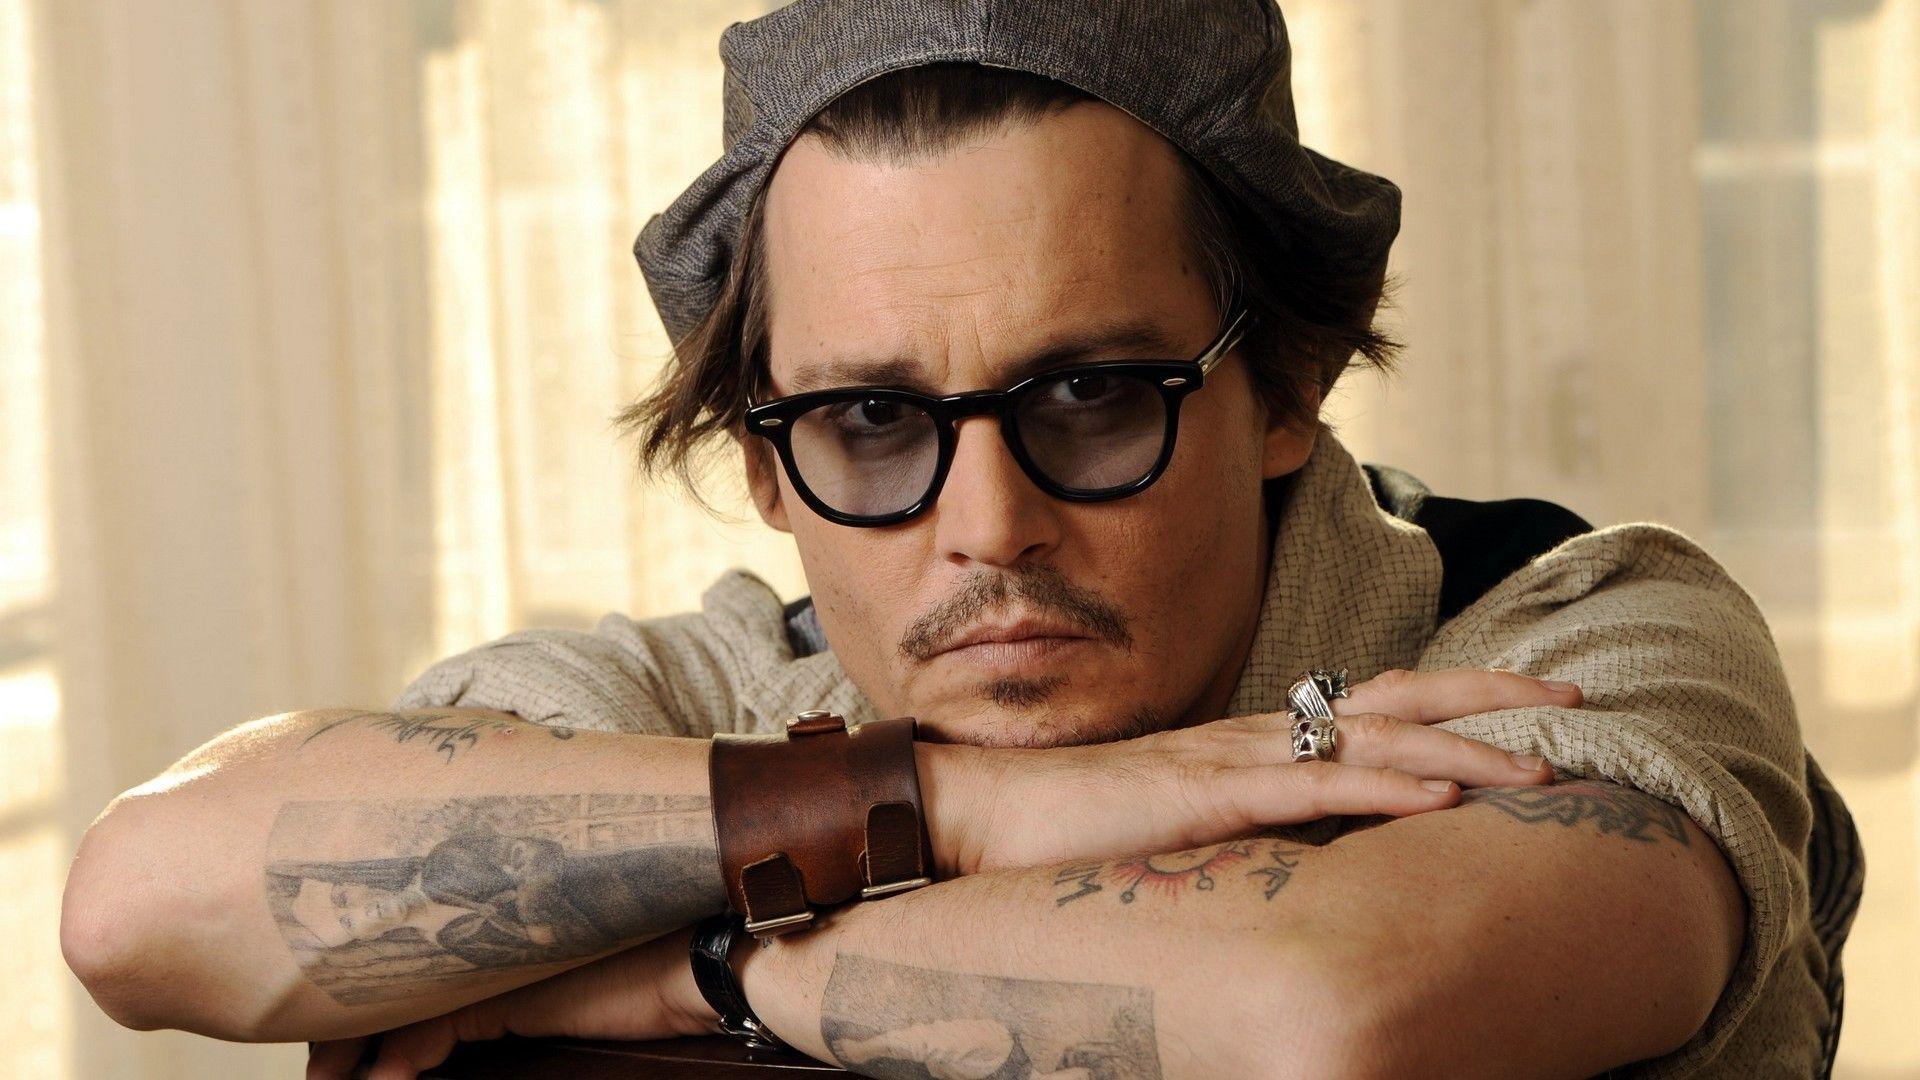 Johnny Depp Wallpaper 18 Background. Wallruru